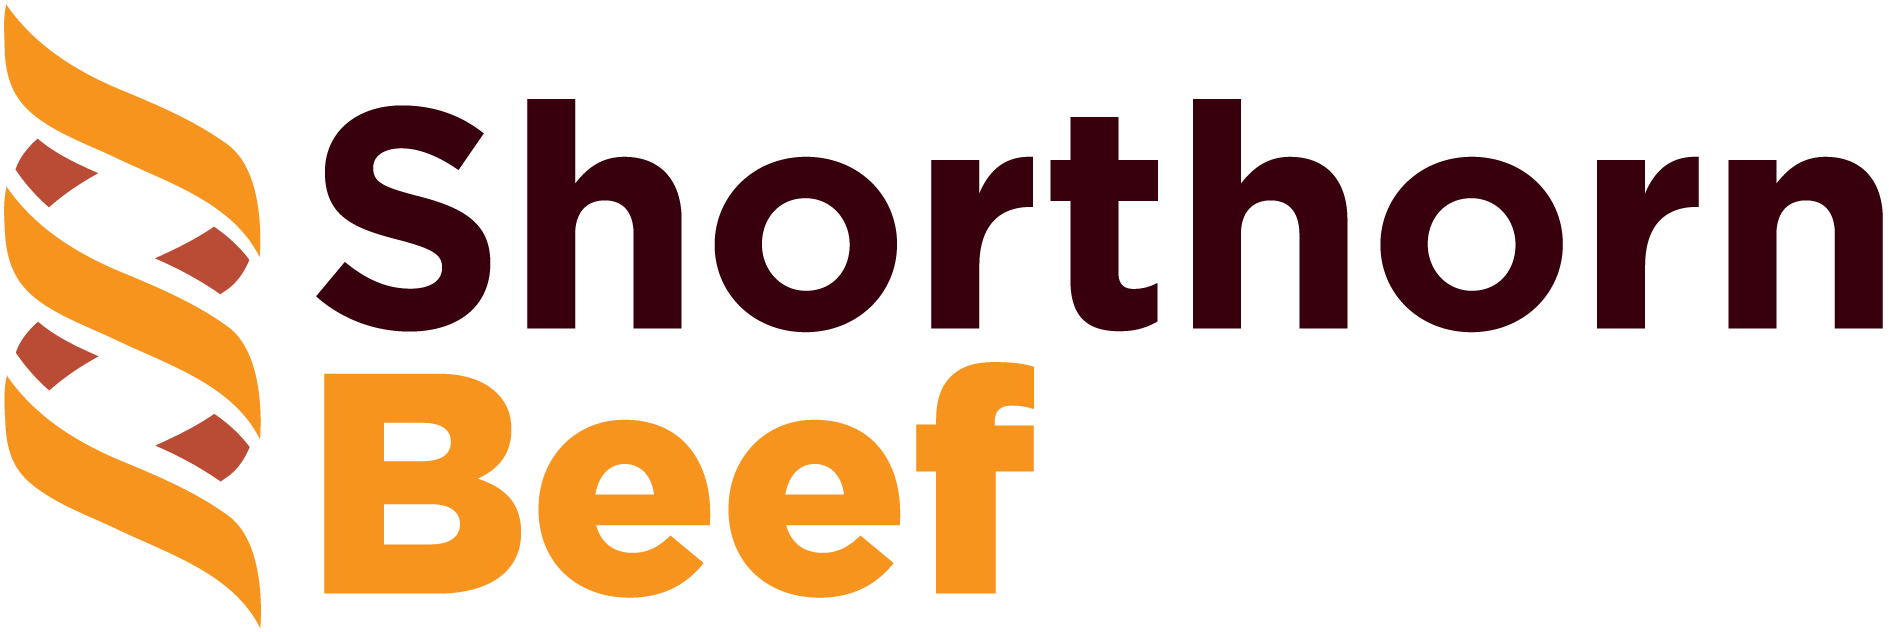 Shorthorn Beef